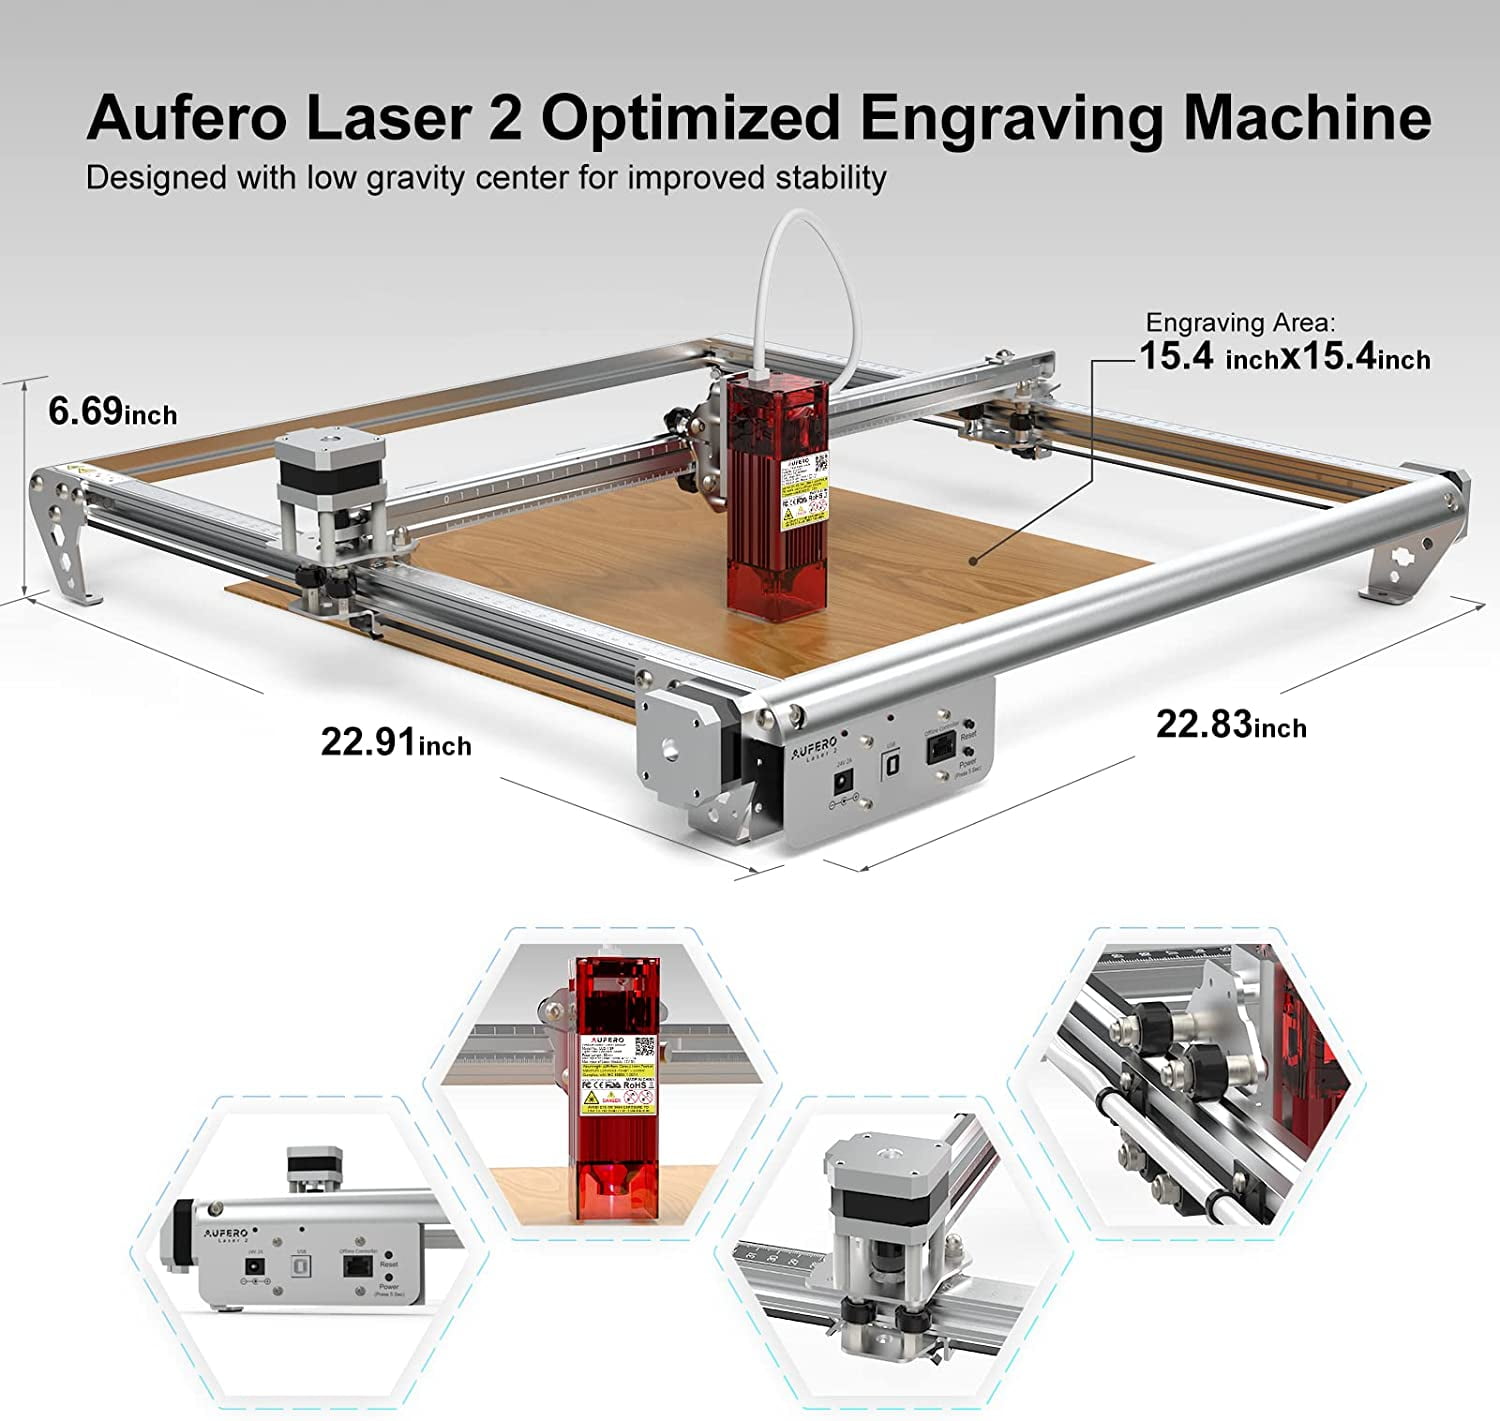 Build your own Laser Engraver – LaserGRBL